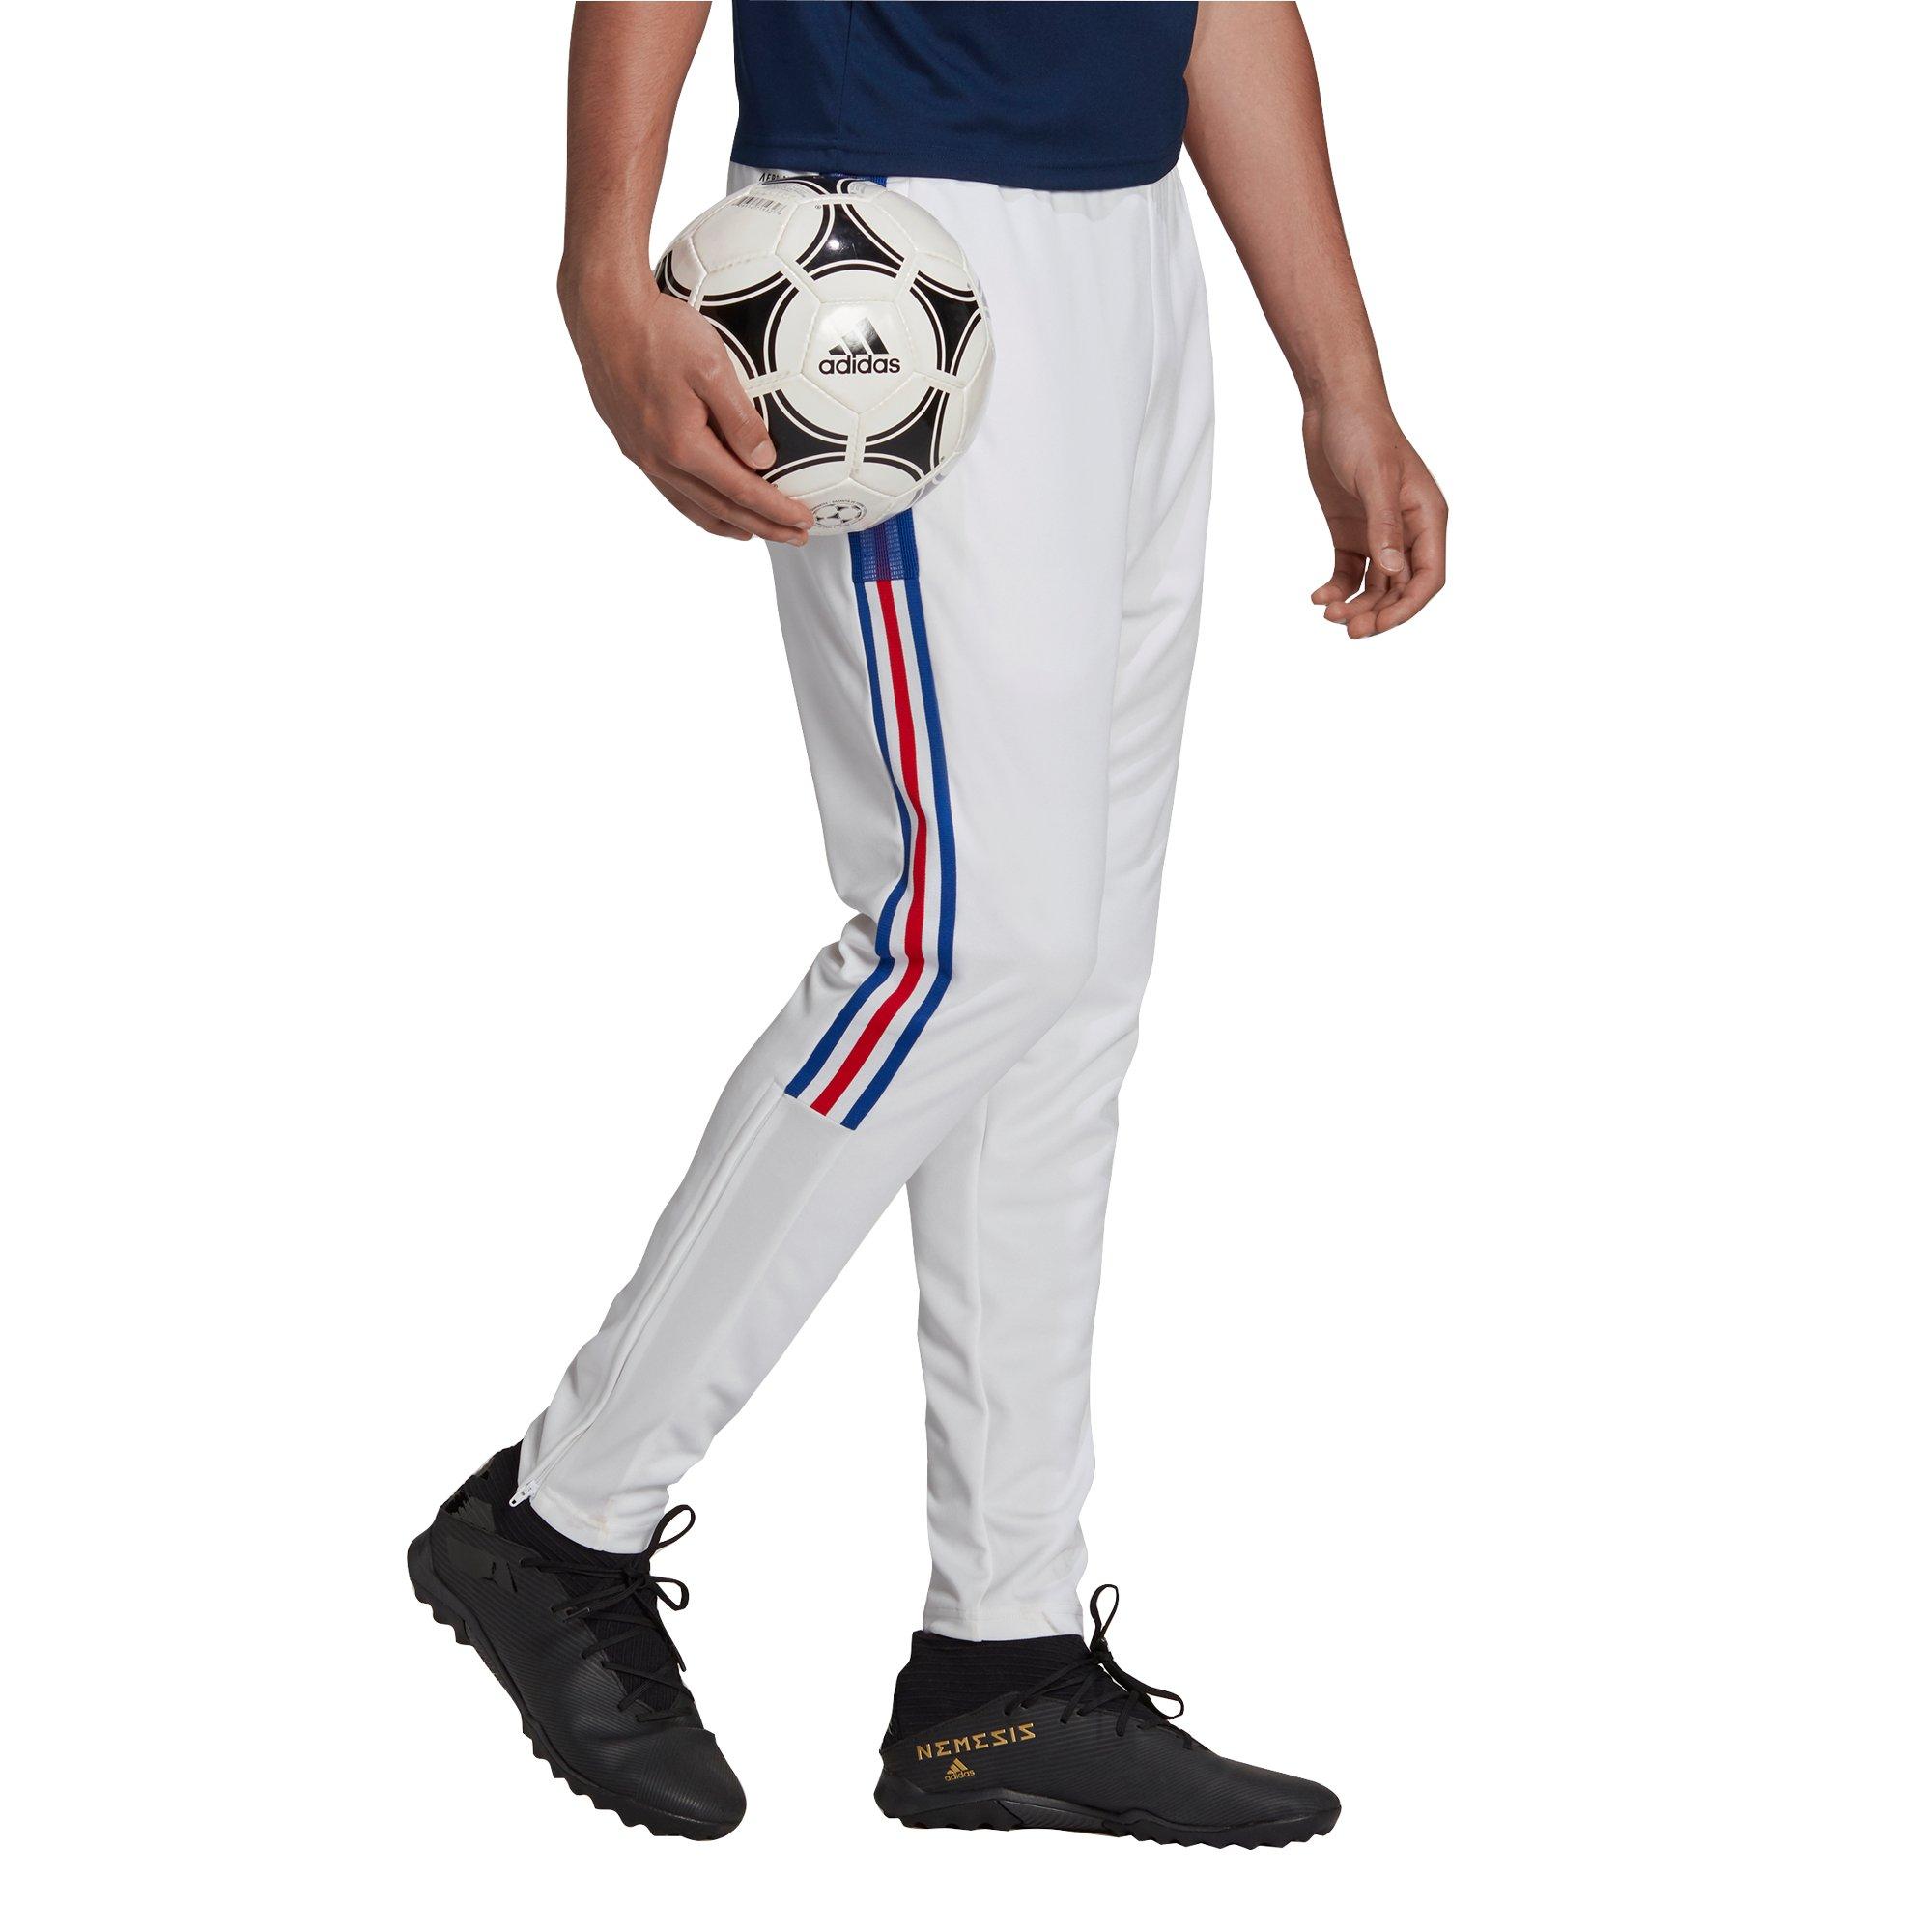 Adidas Men's Tiro Track Pants - Pulse Blue / White — Just For Sports